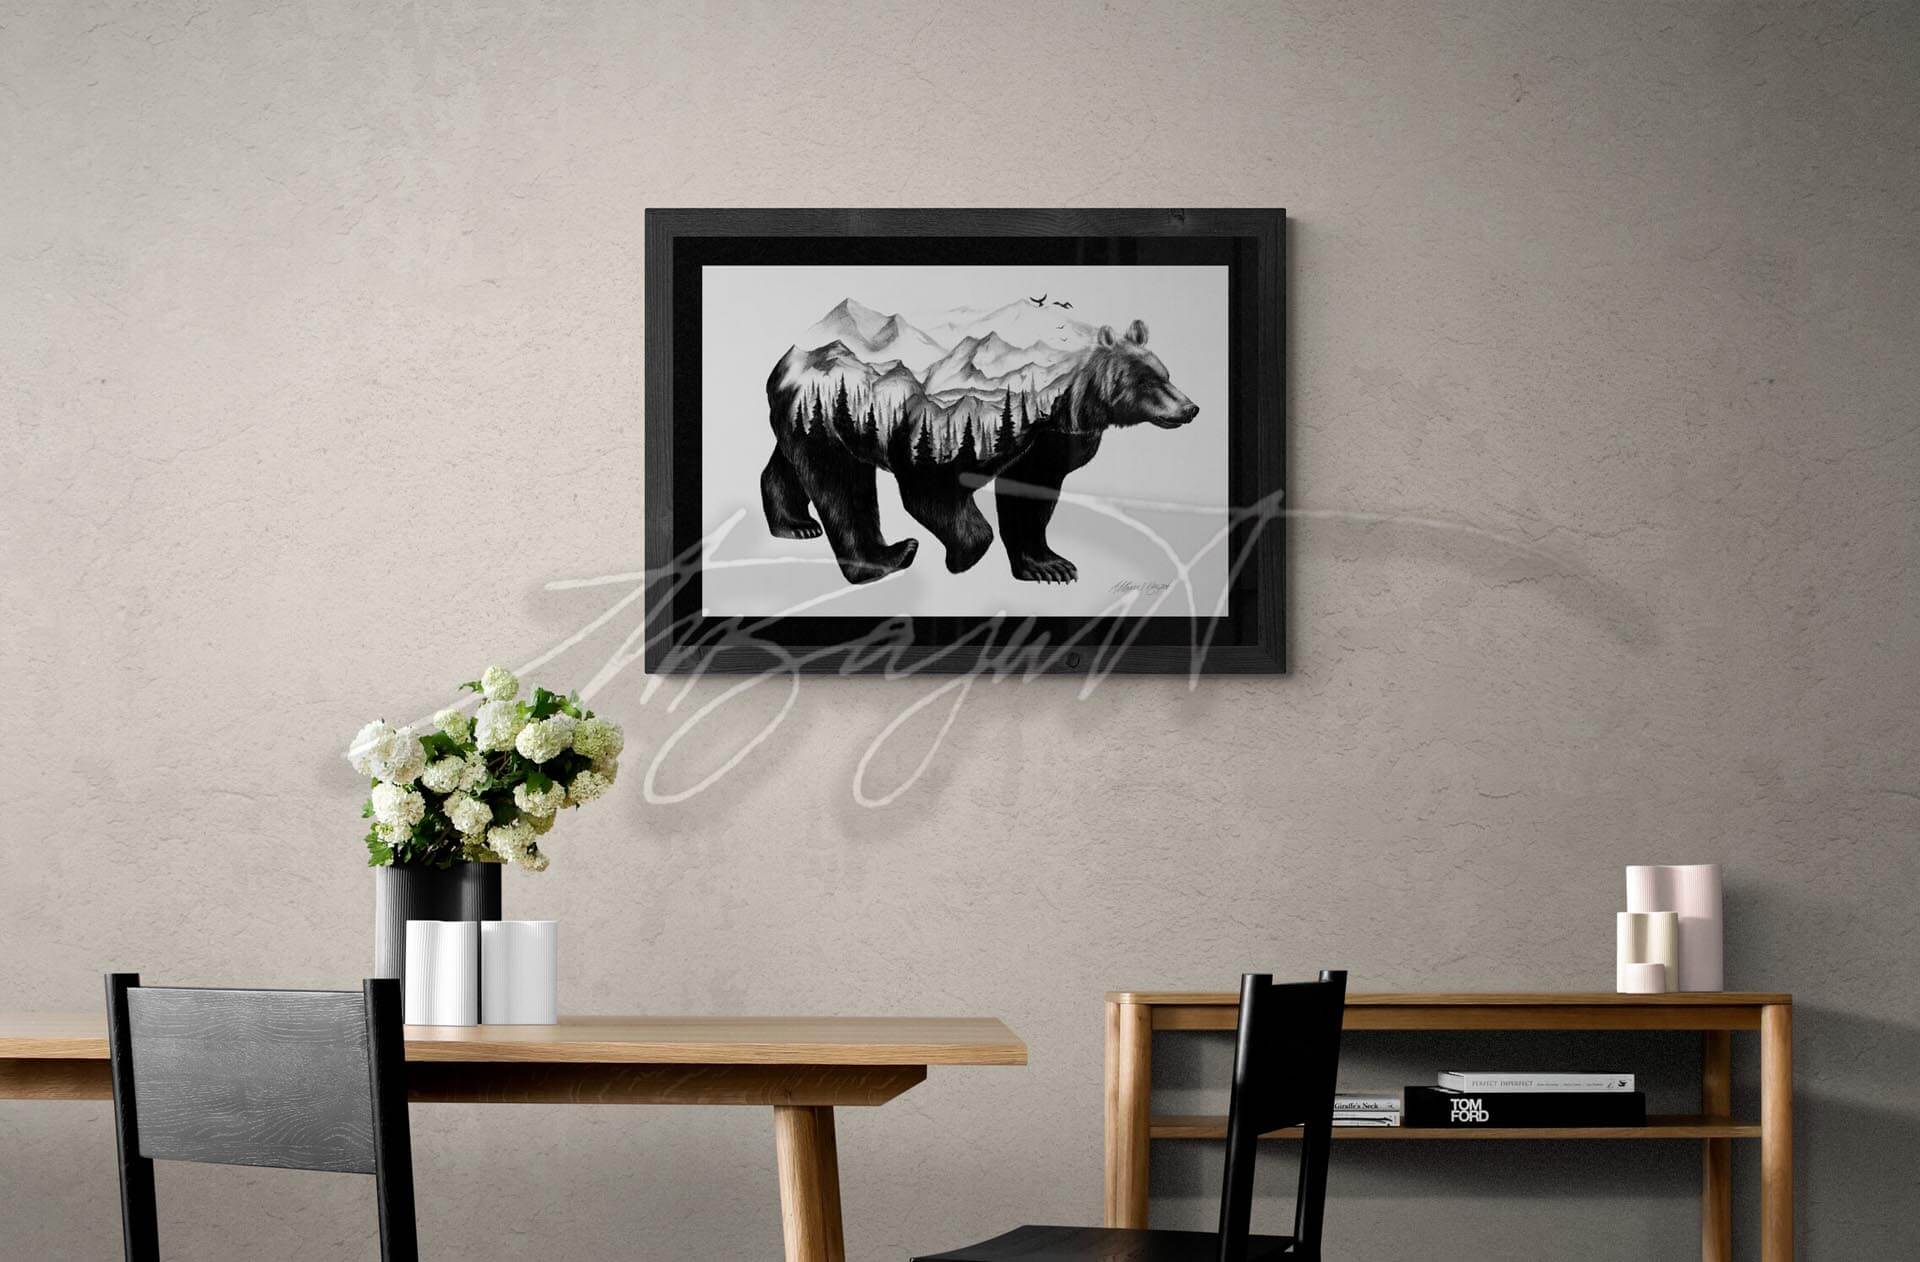 black bear fine art print drawing in frame over table 2 - Pelavida - Shop For Life